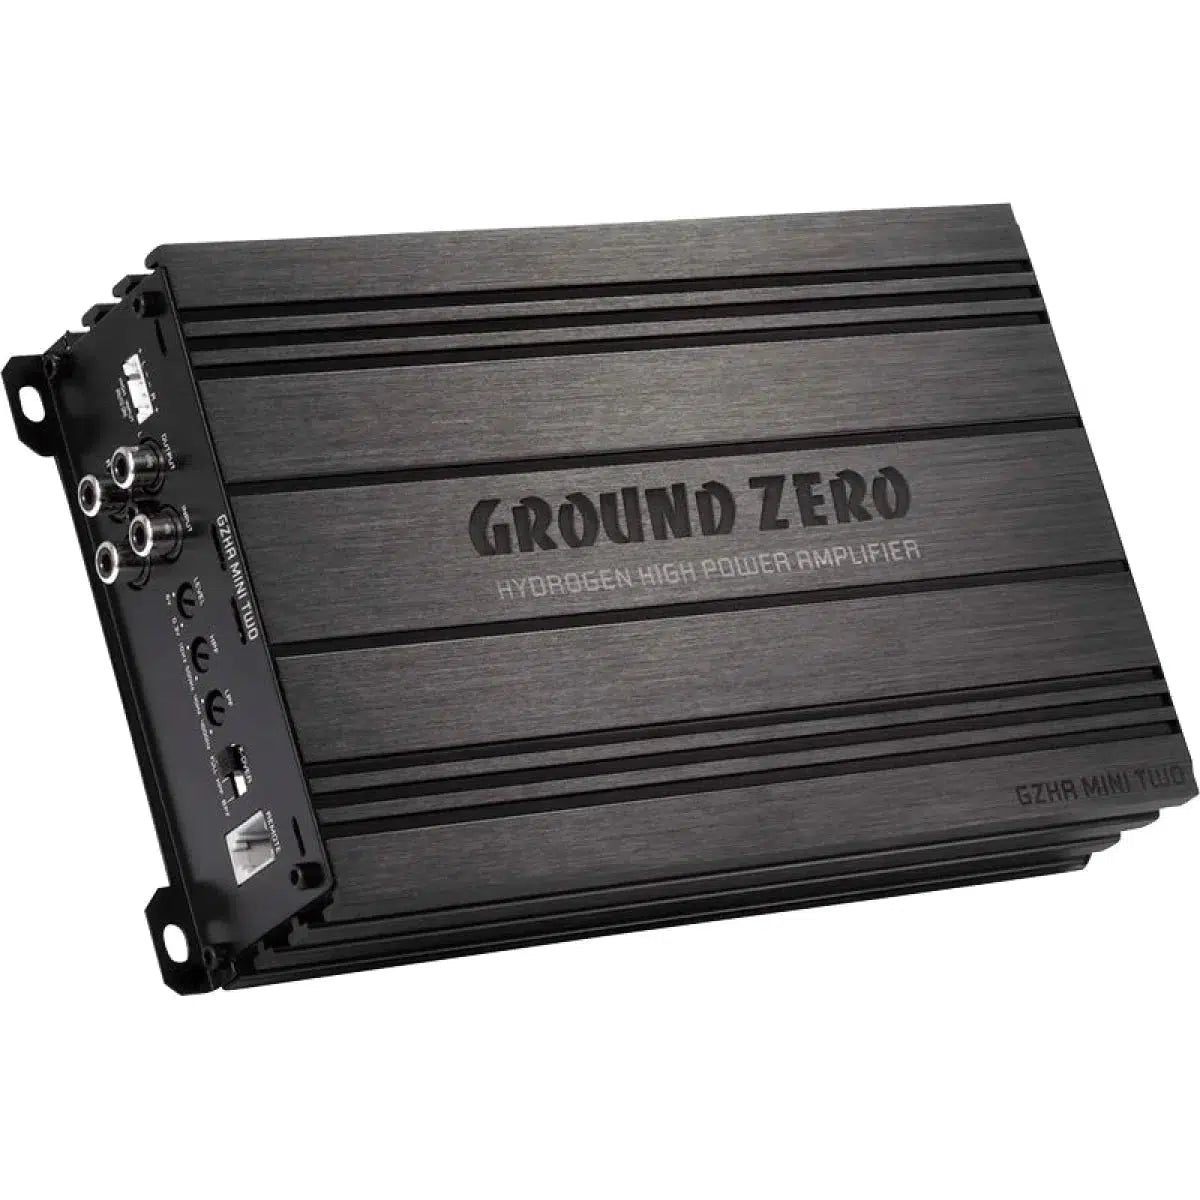 Ground Zero-Hydrogen GZHA MINI TWO-2-channel amplifier-Masori.de